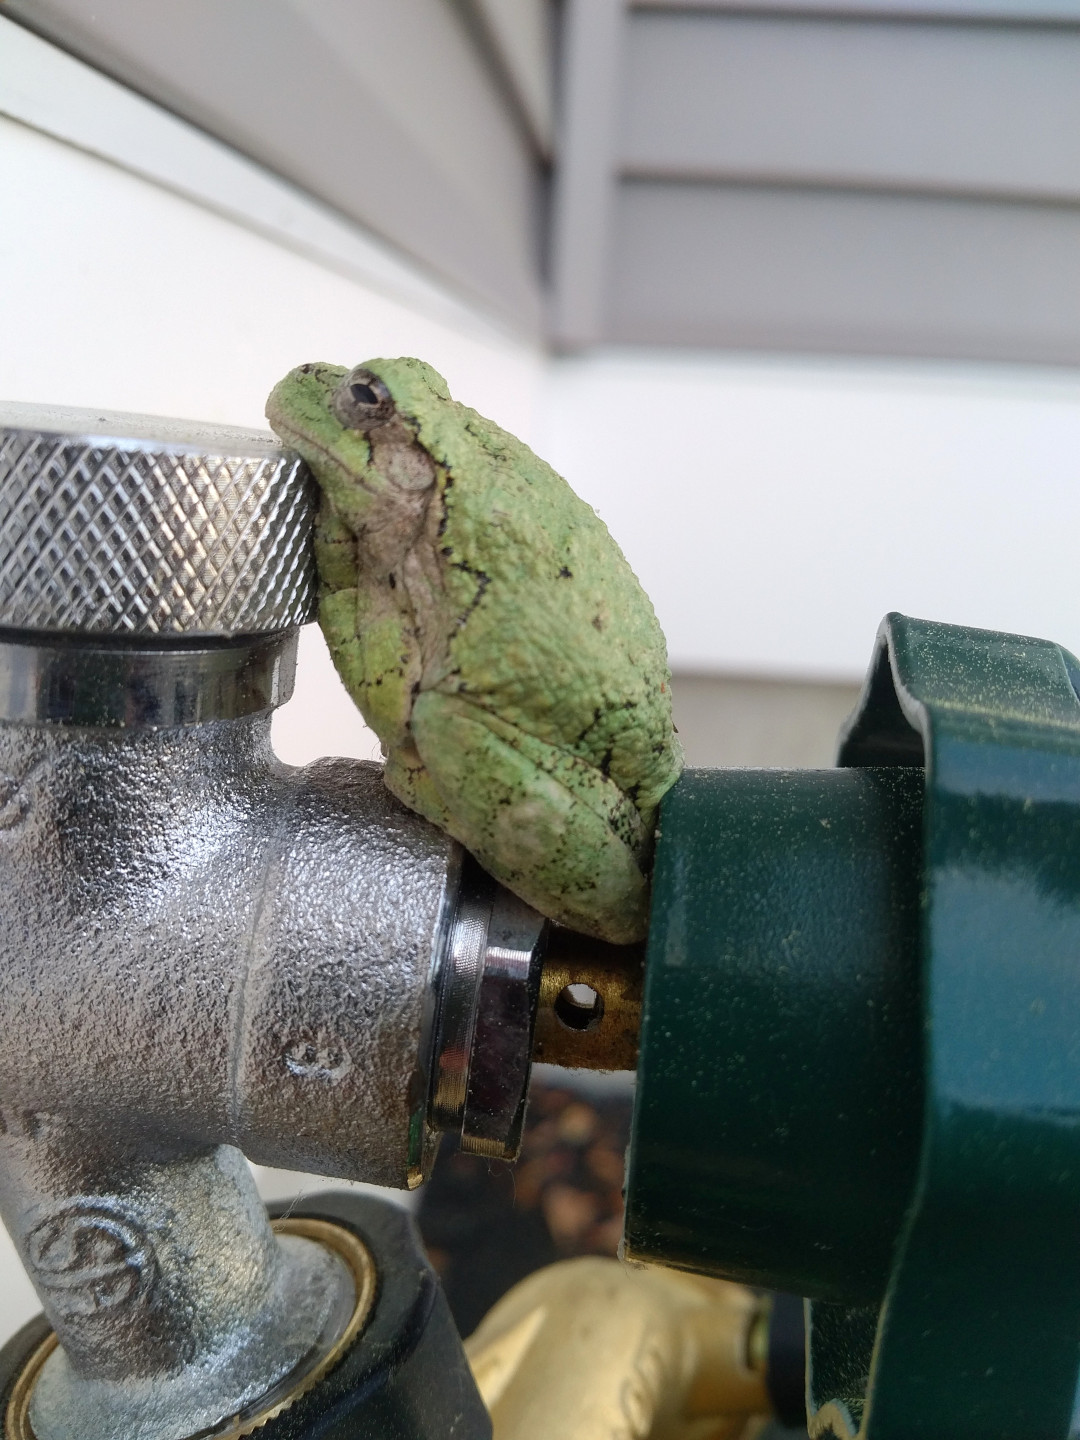 frog sitting on a garden hose